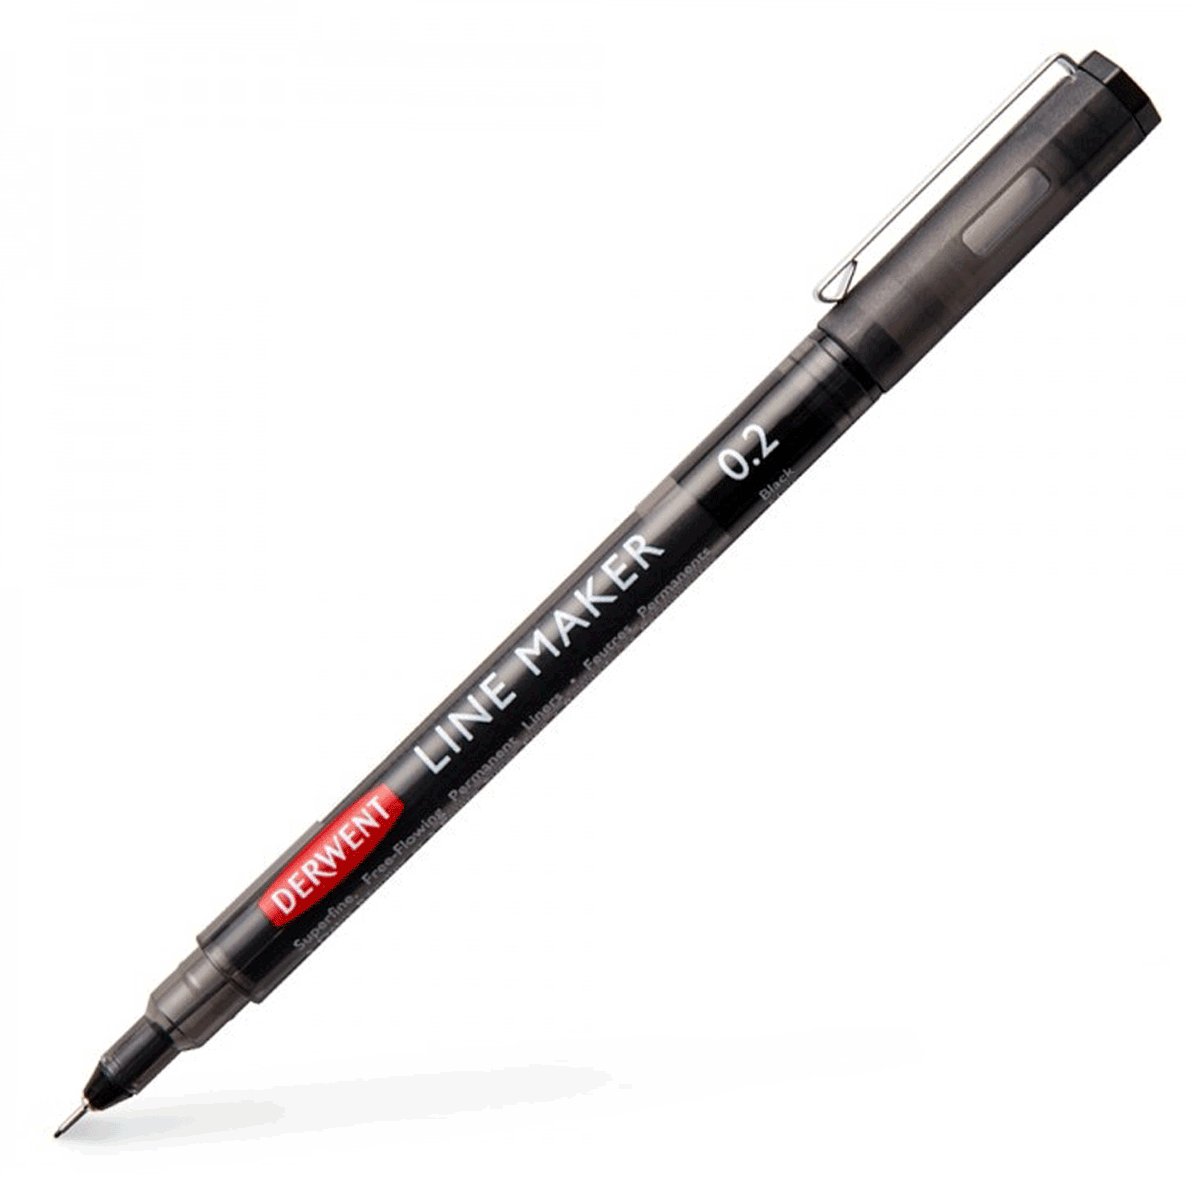 Derwent Graphik Line Marker Pen - Black 0.2